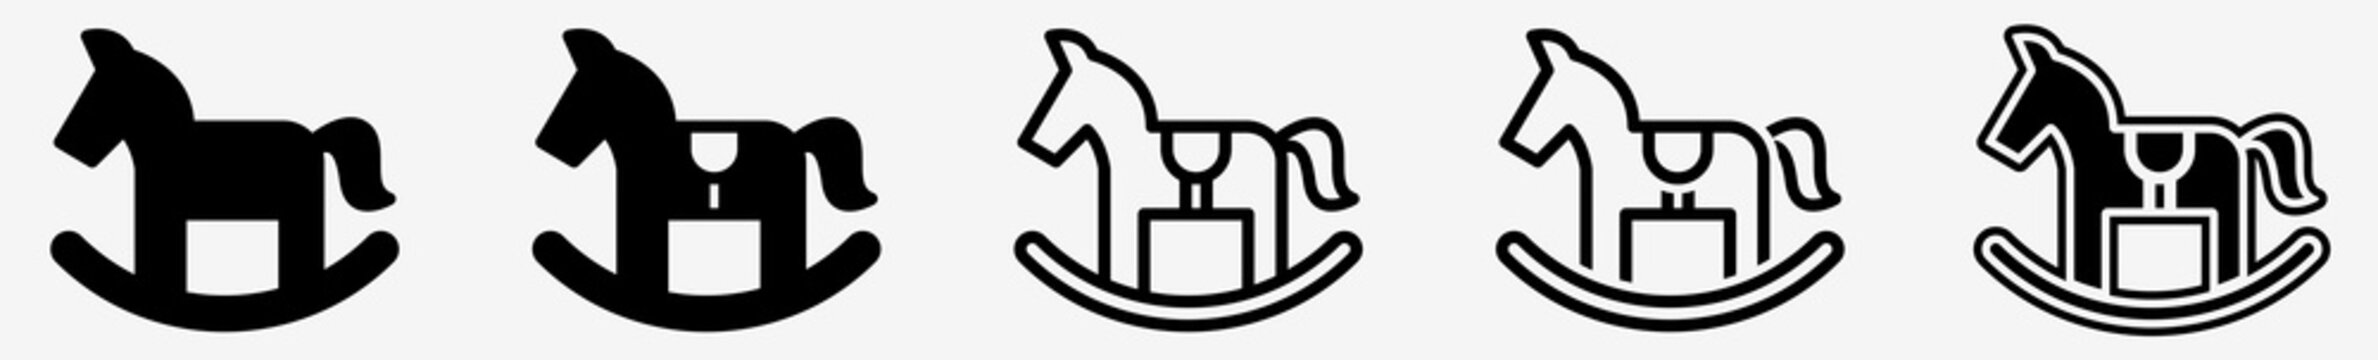 Rocking Horse Icon Set | Rocking Horse Vector Illustration Set | Wooden Rocking Horse Icons Isolated Collection